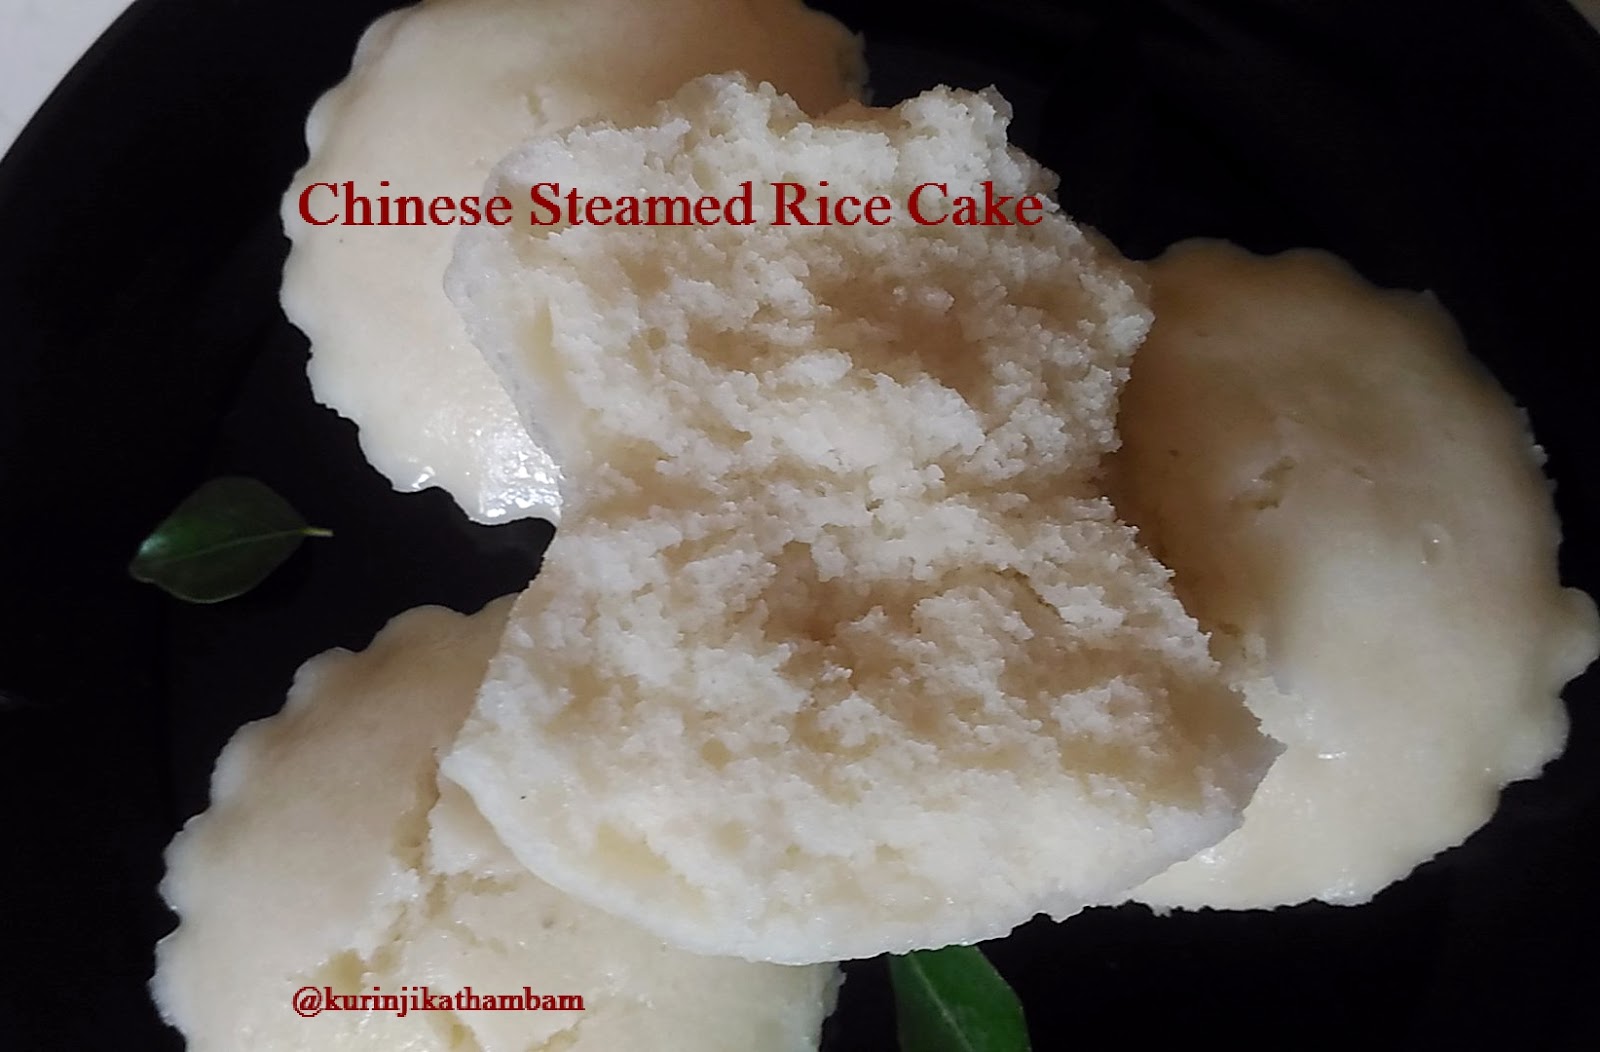 Steamed Rice Cake-Rice Fa Gao - China Sichuan Food